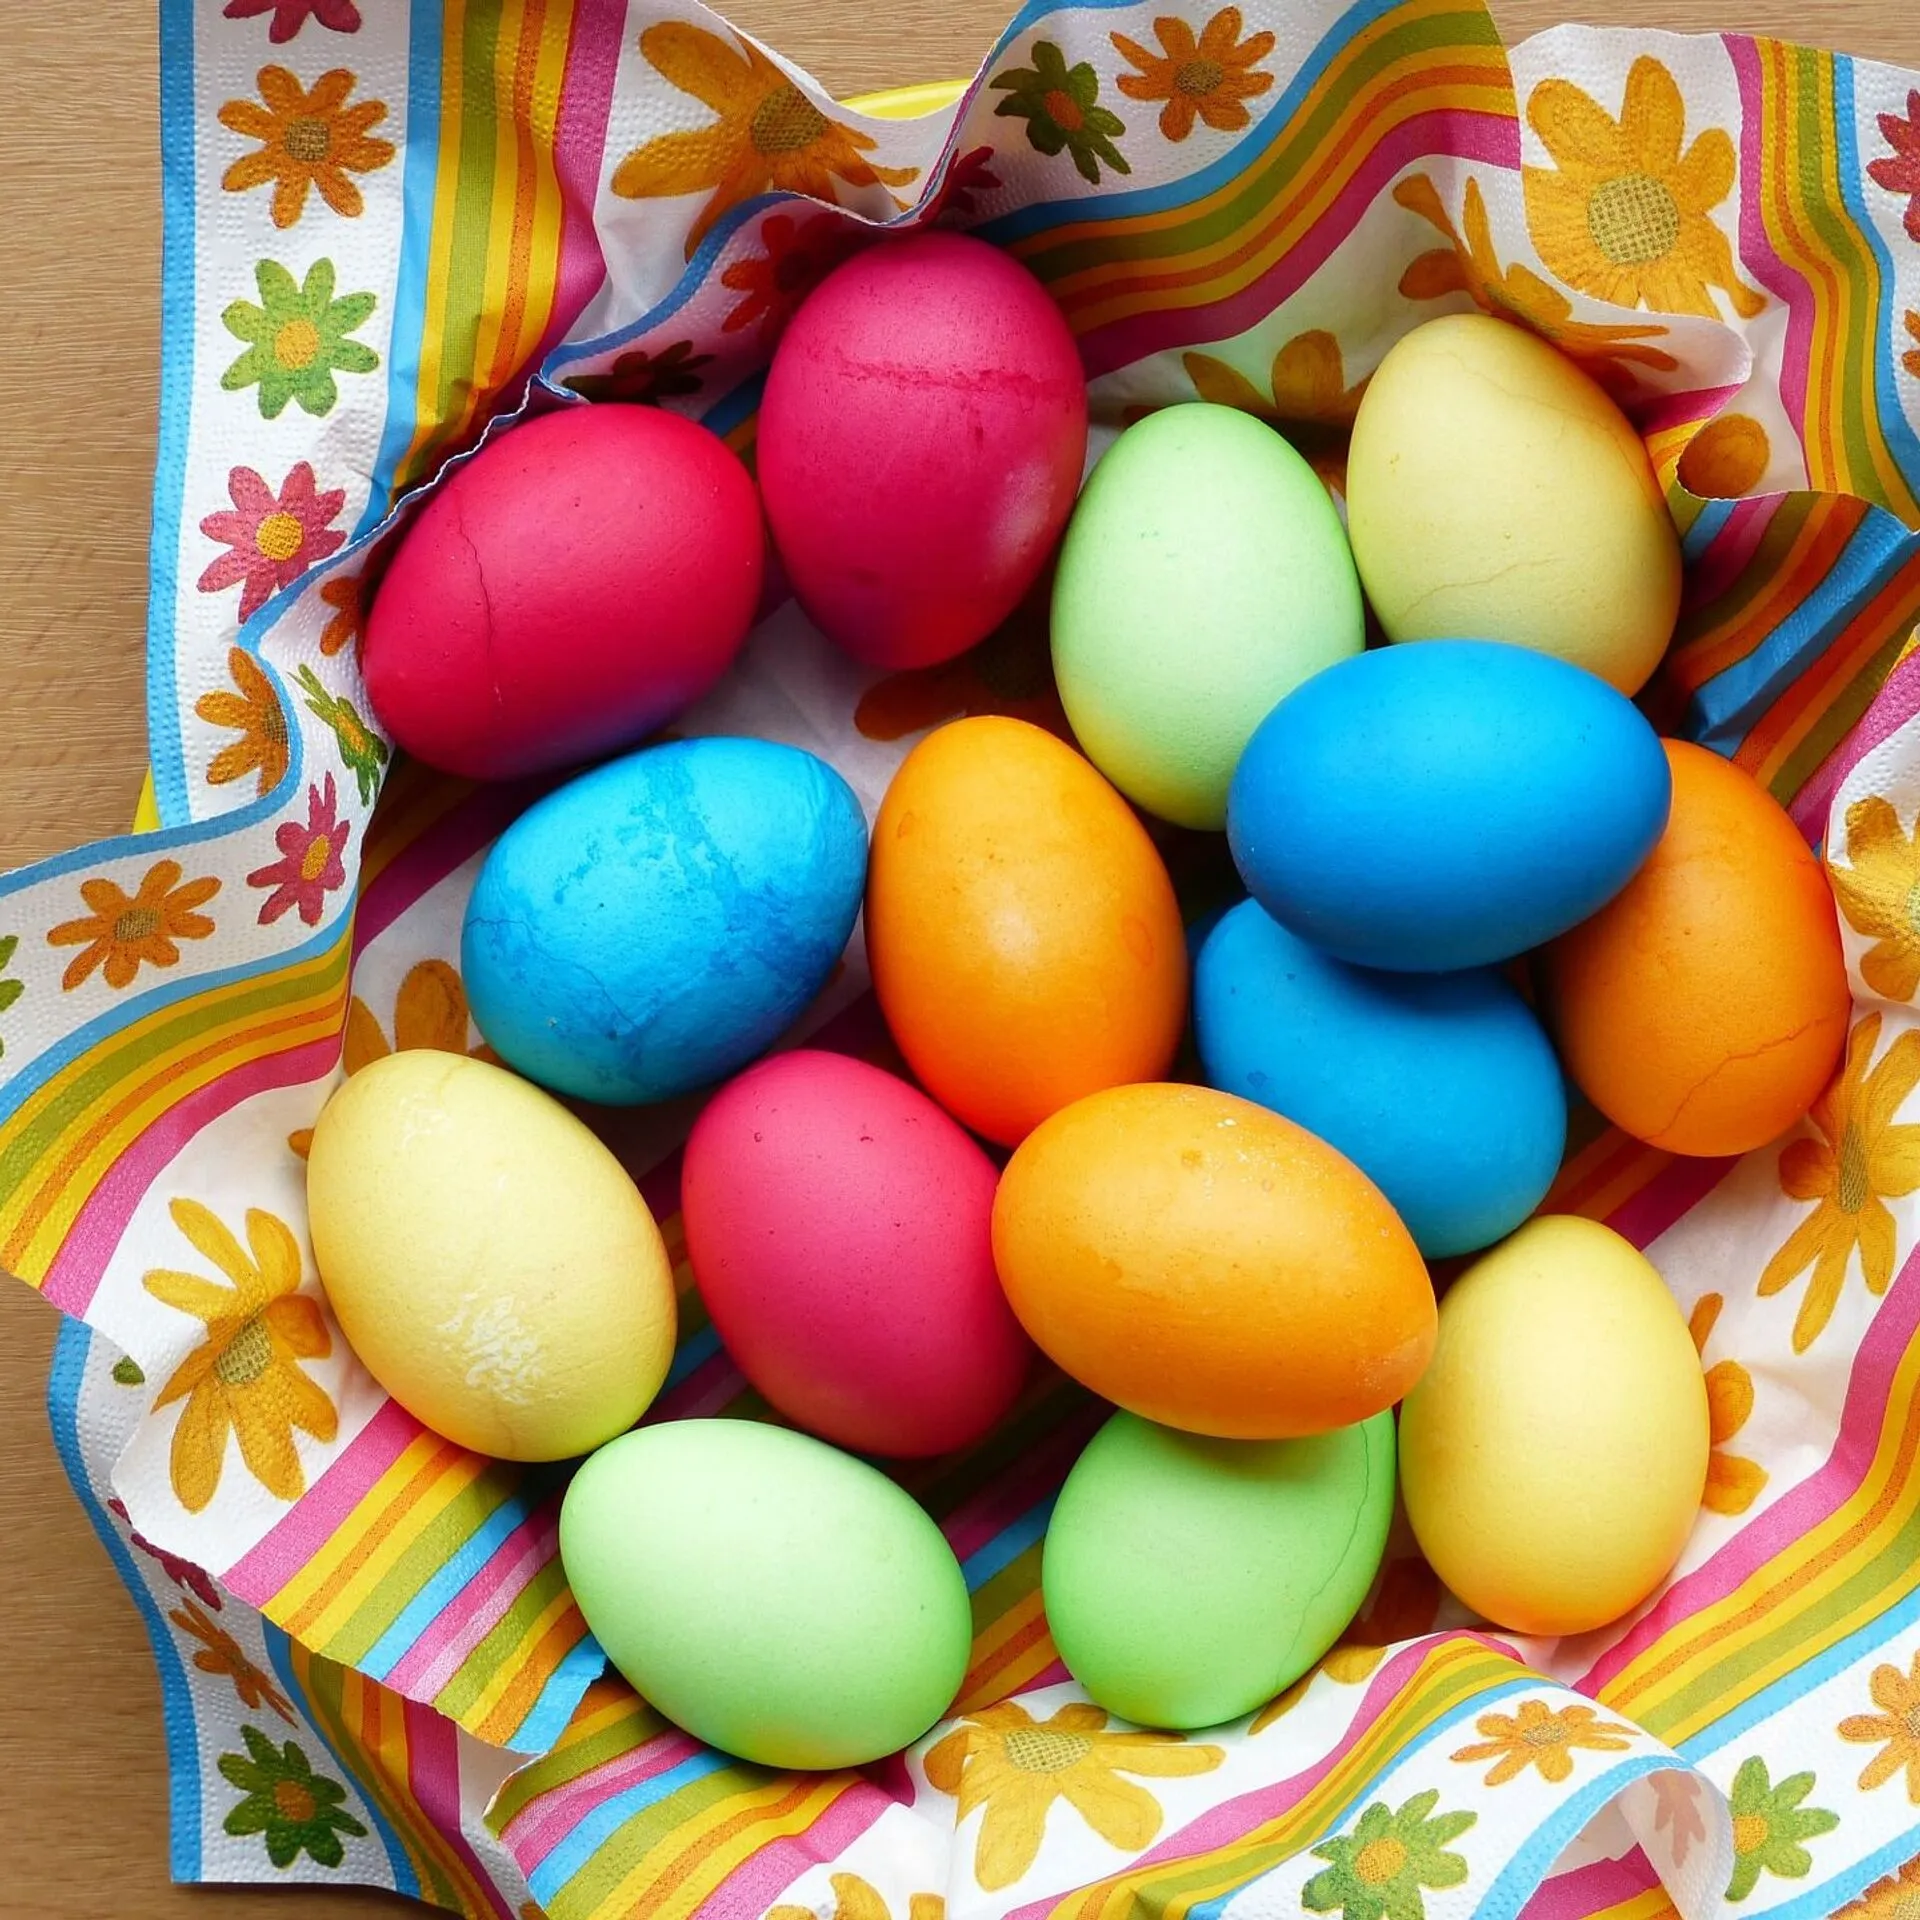 Разноцветные яйца на пасху. Пасхальное яйцо. Крашеные яйца на Пасху. Разноцветные пасхальные яйца.